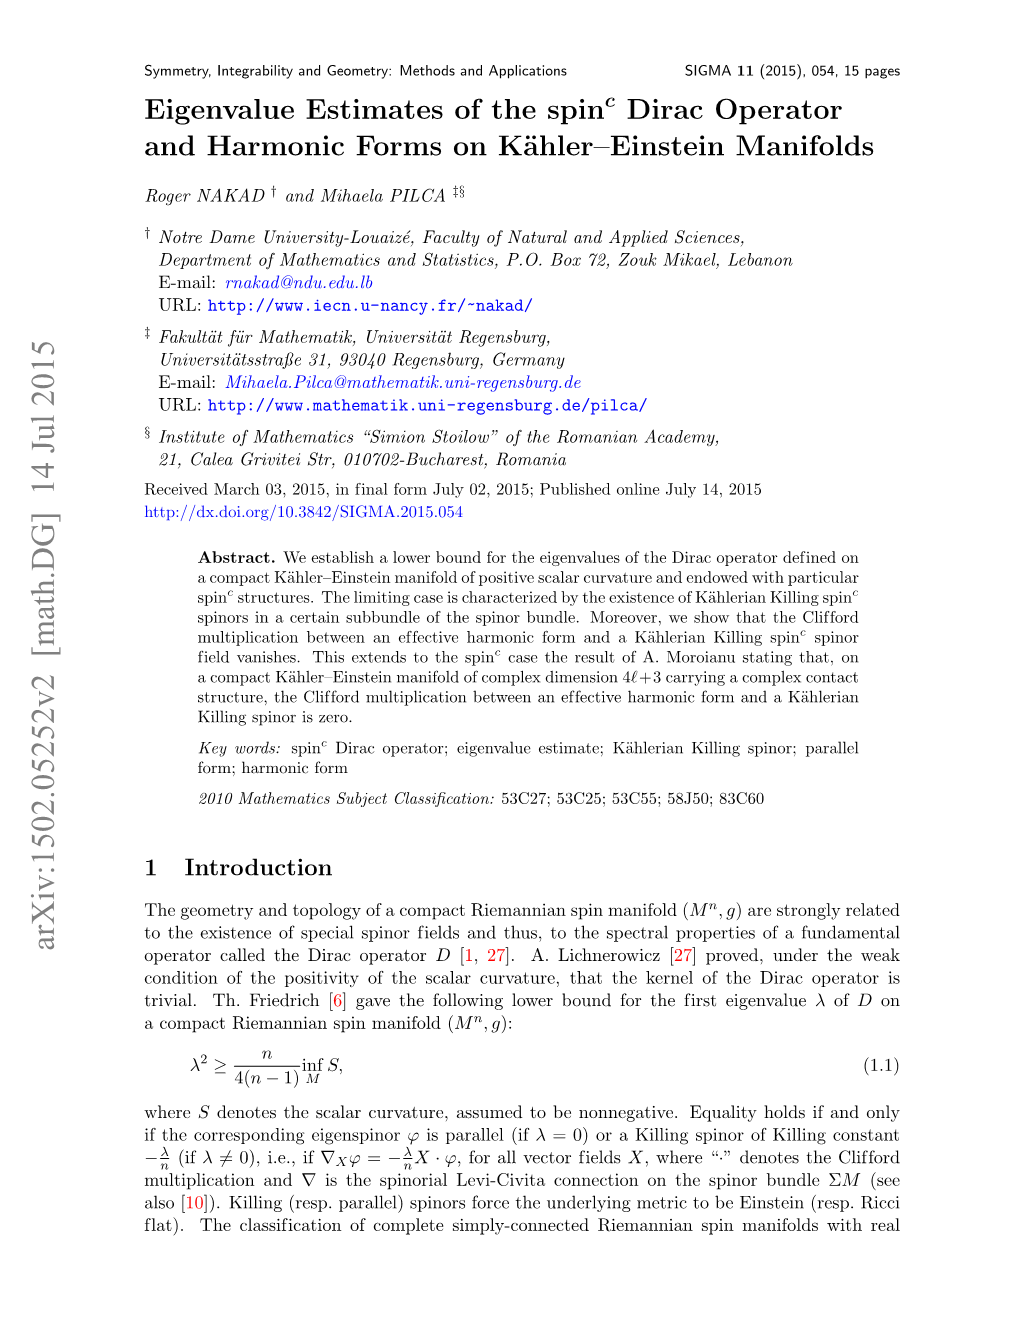 Eigenvalue Estimates of the ${\Rm Spin}^ C $ Dirac Operator and Harmonic